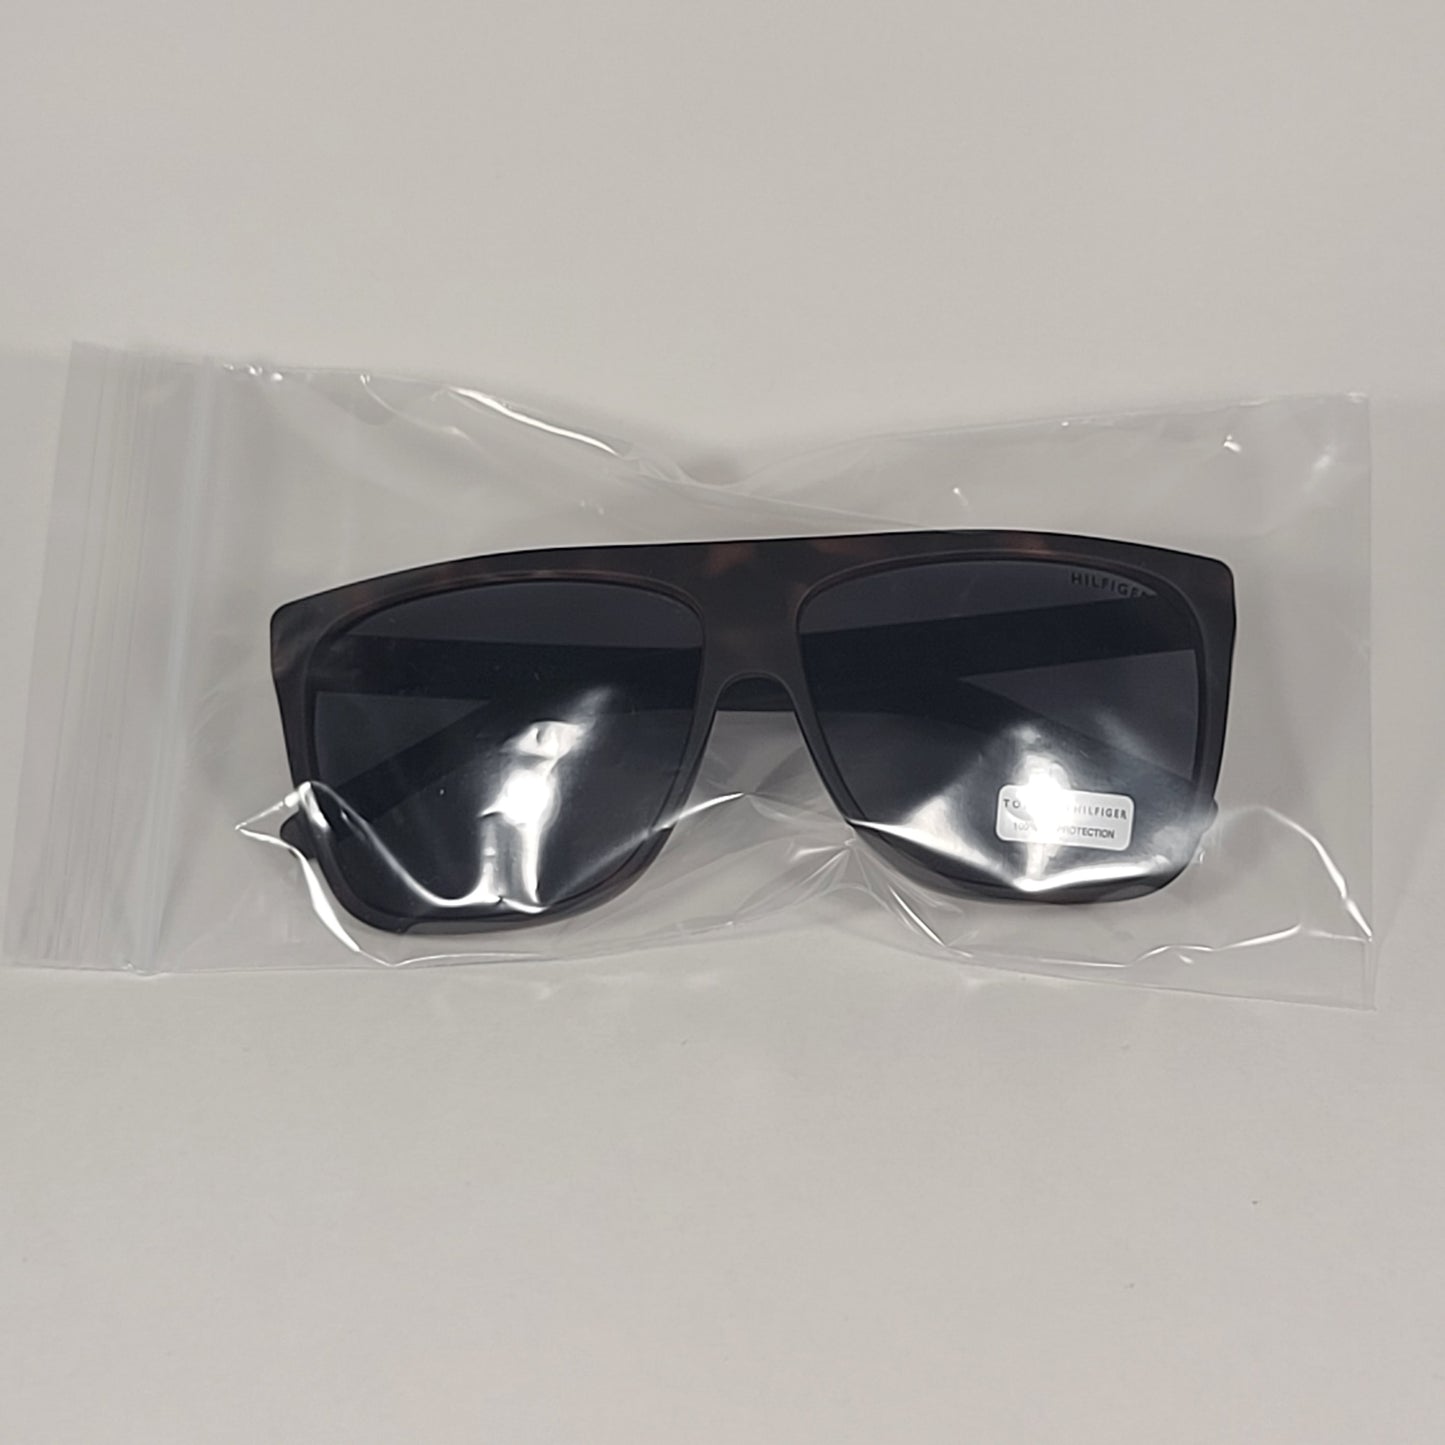 Tommy Hilfiger Mickey Square Sunglasses Matte Tortoise Frame Gray Lens MICKEY MP OM599 - Sunglasses